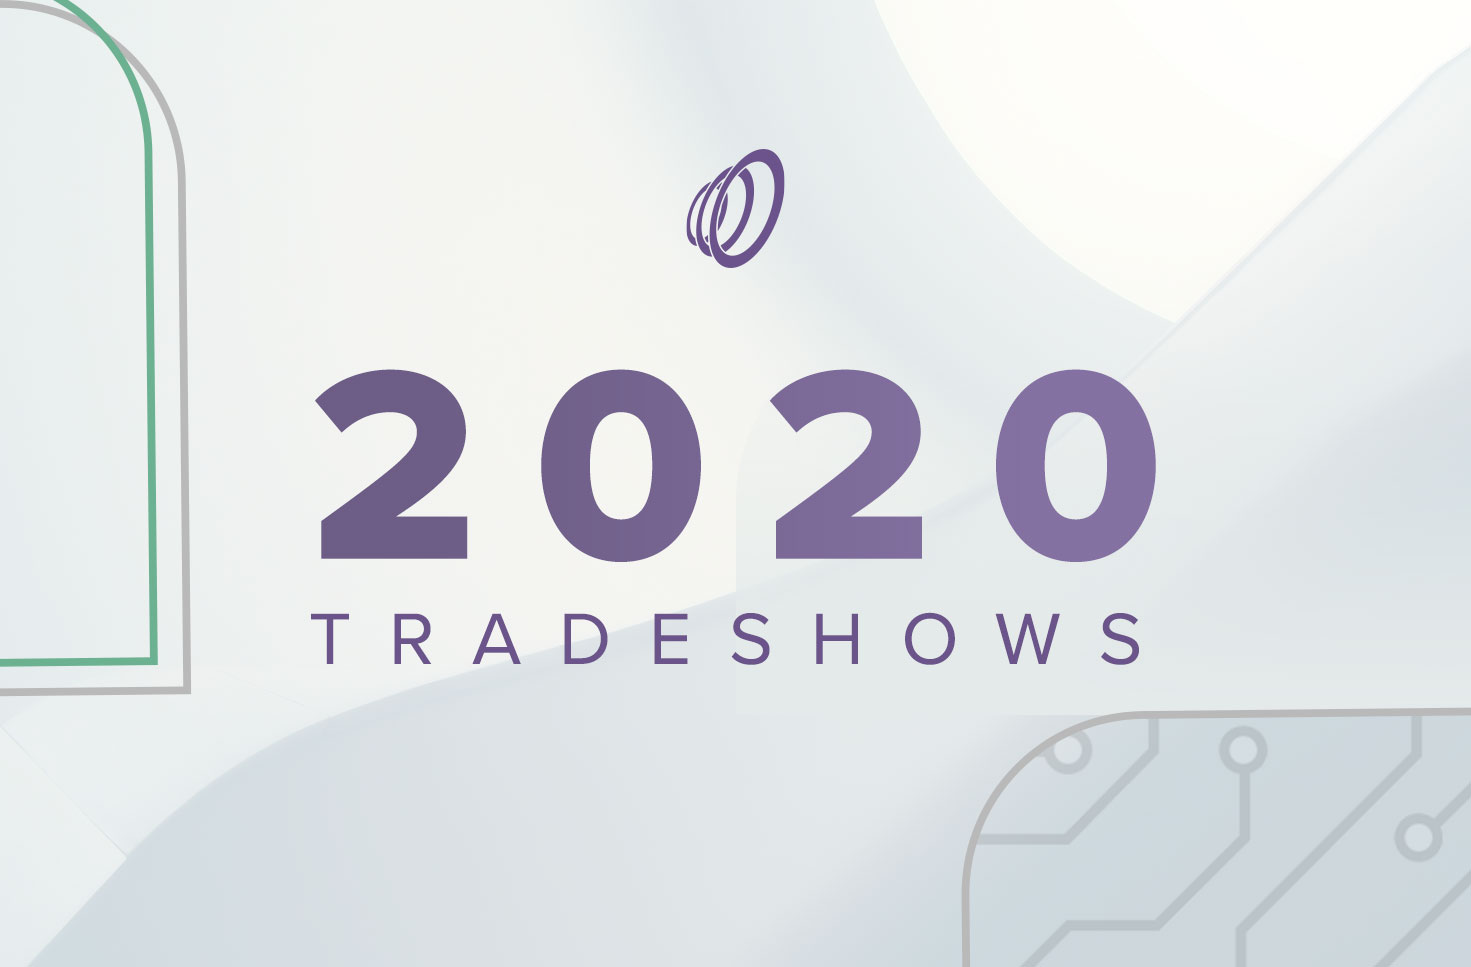 2020 tradeshows